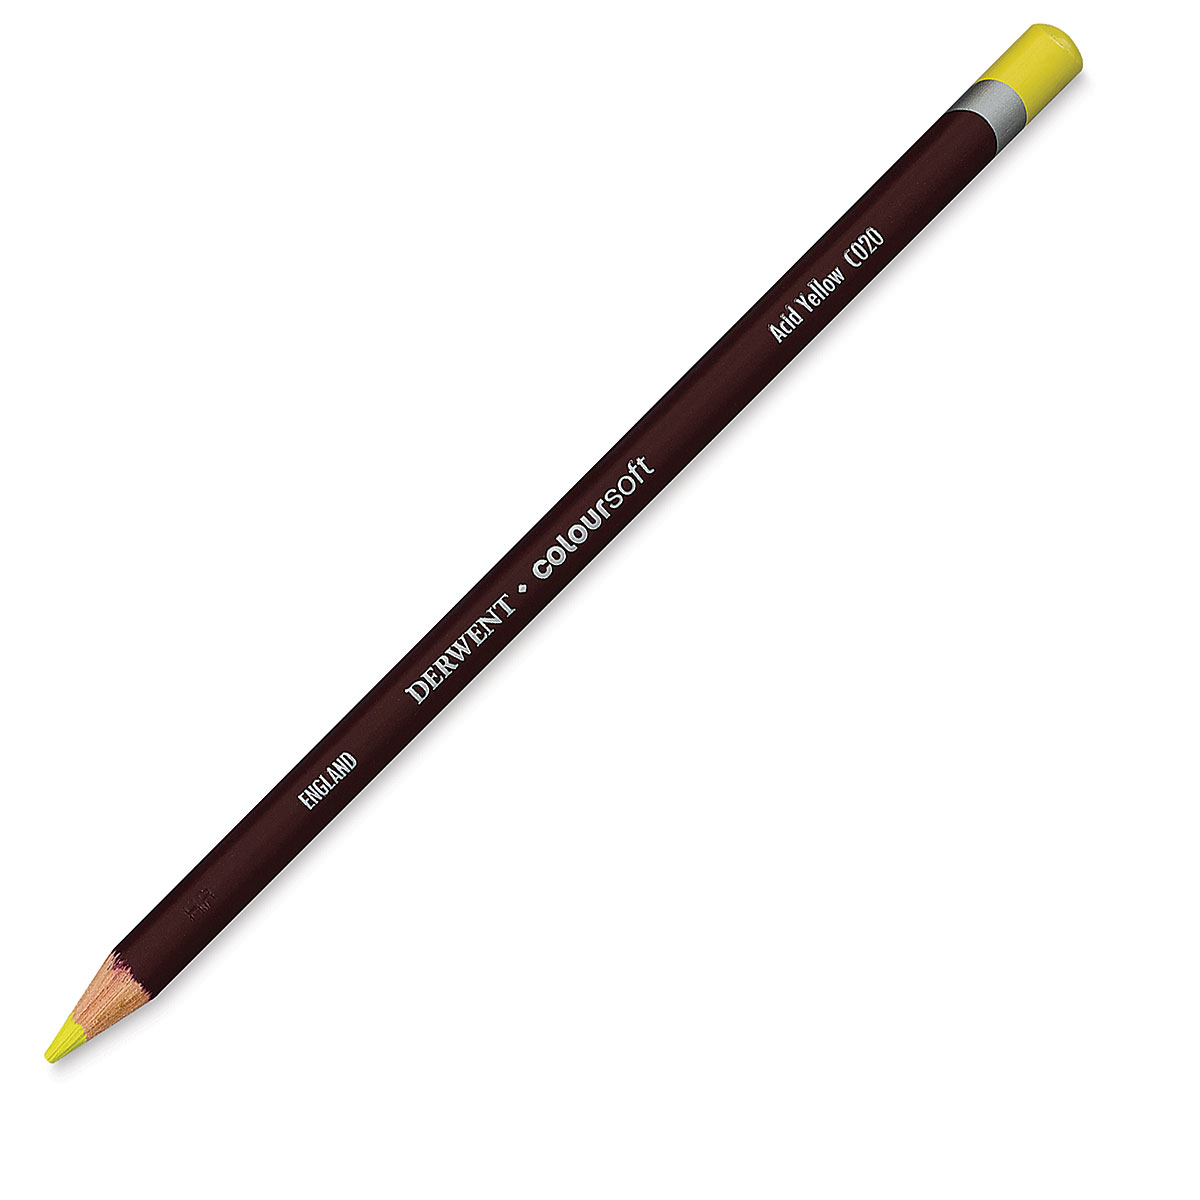 Derwent Coloursoft Pencil Sets – ARCH Art Supplies